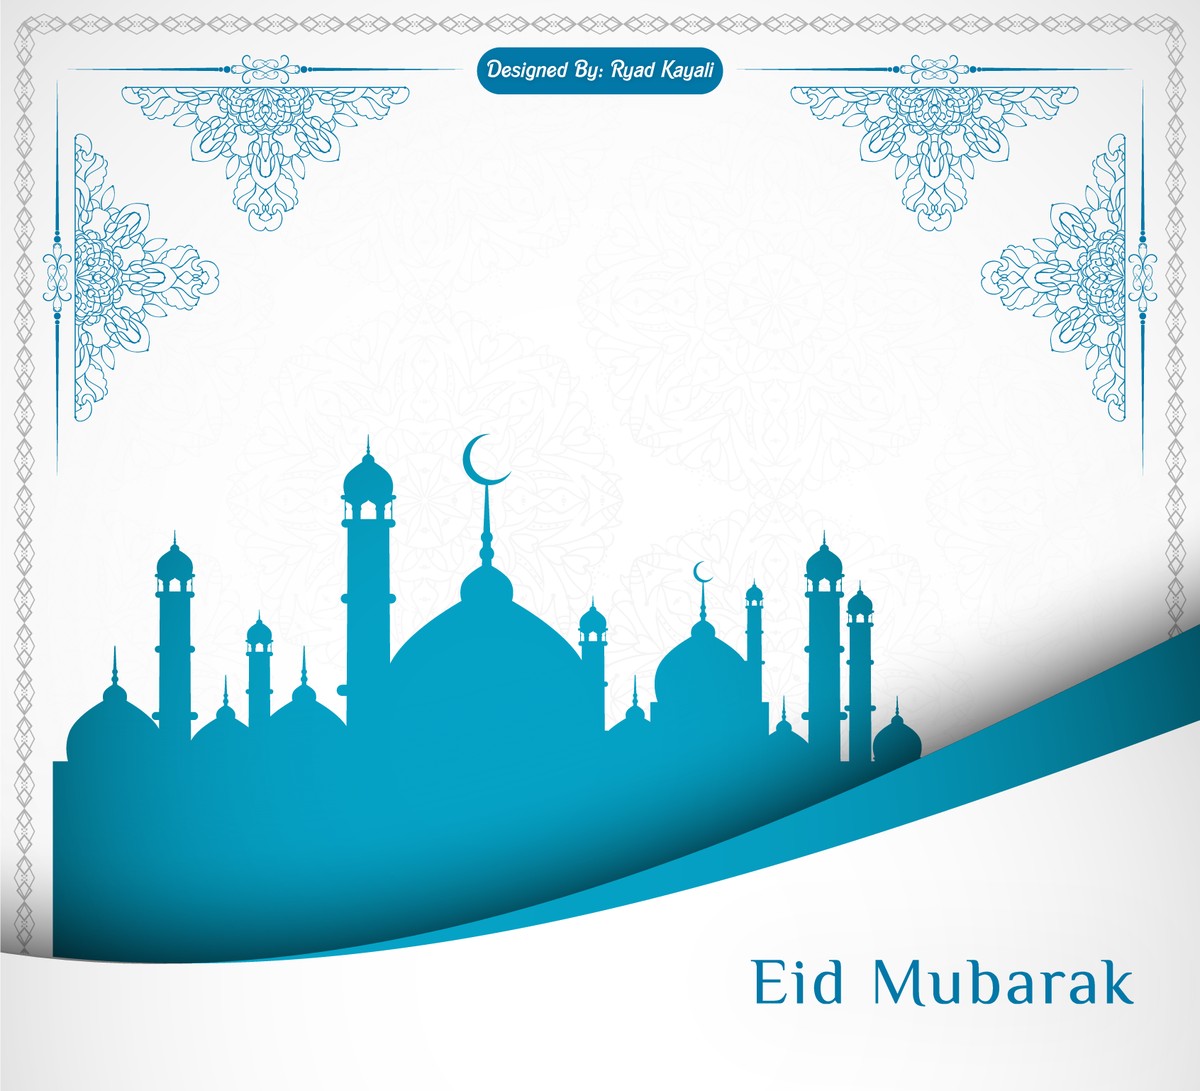 Congratulations card on the occasion of Eid Al Fitr